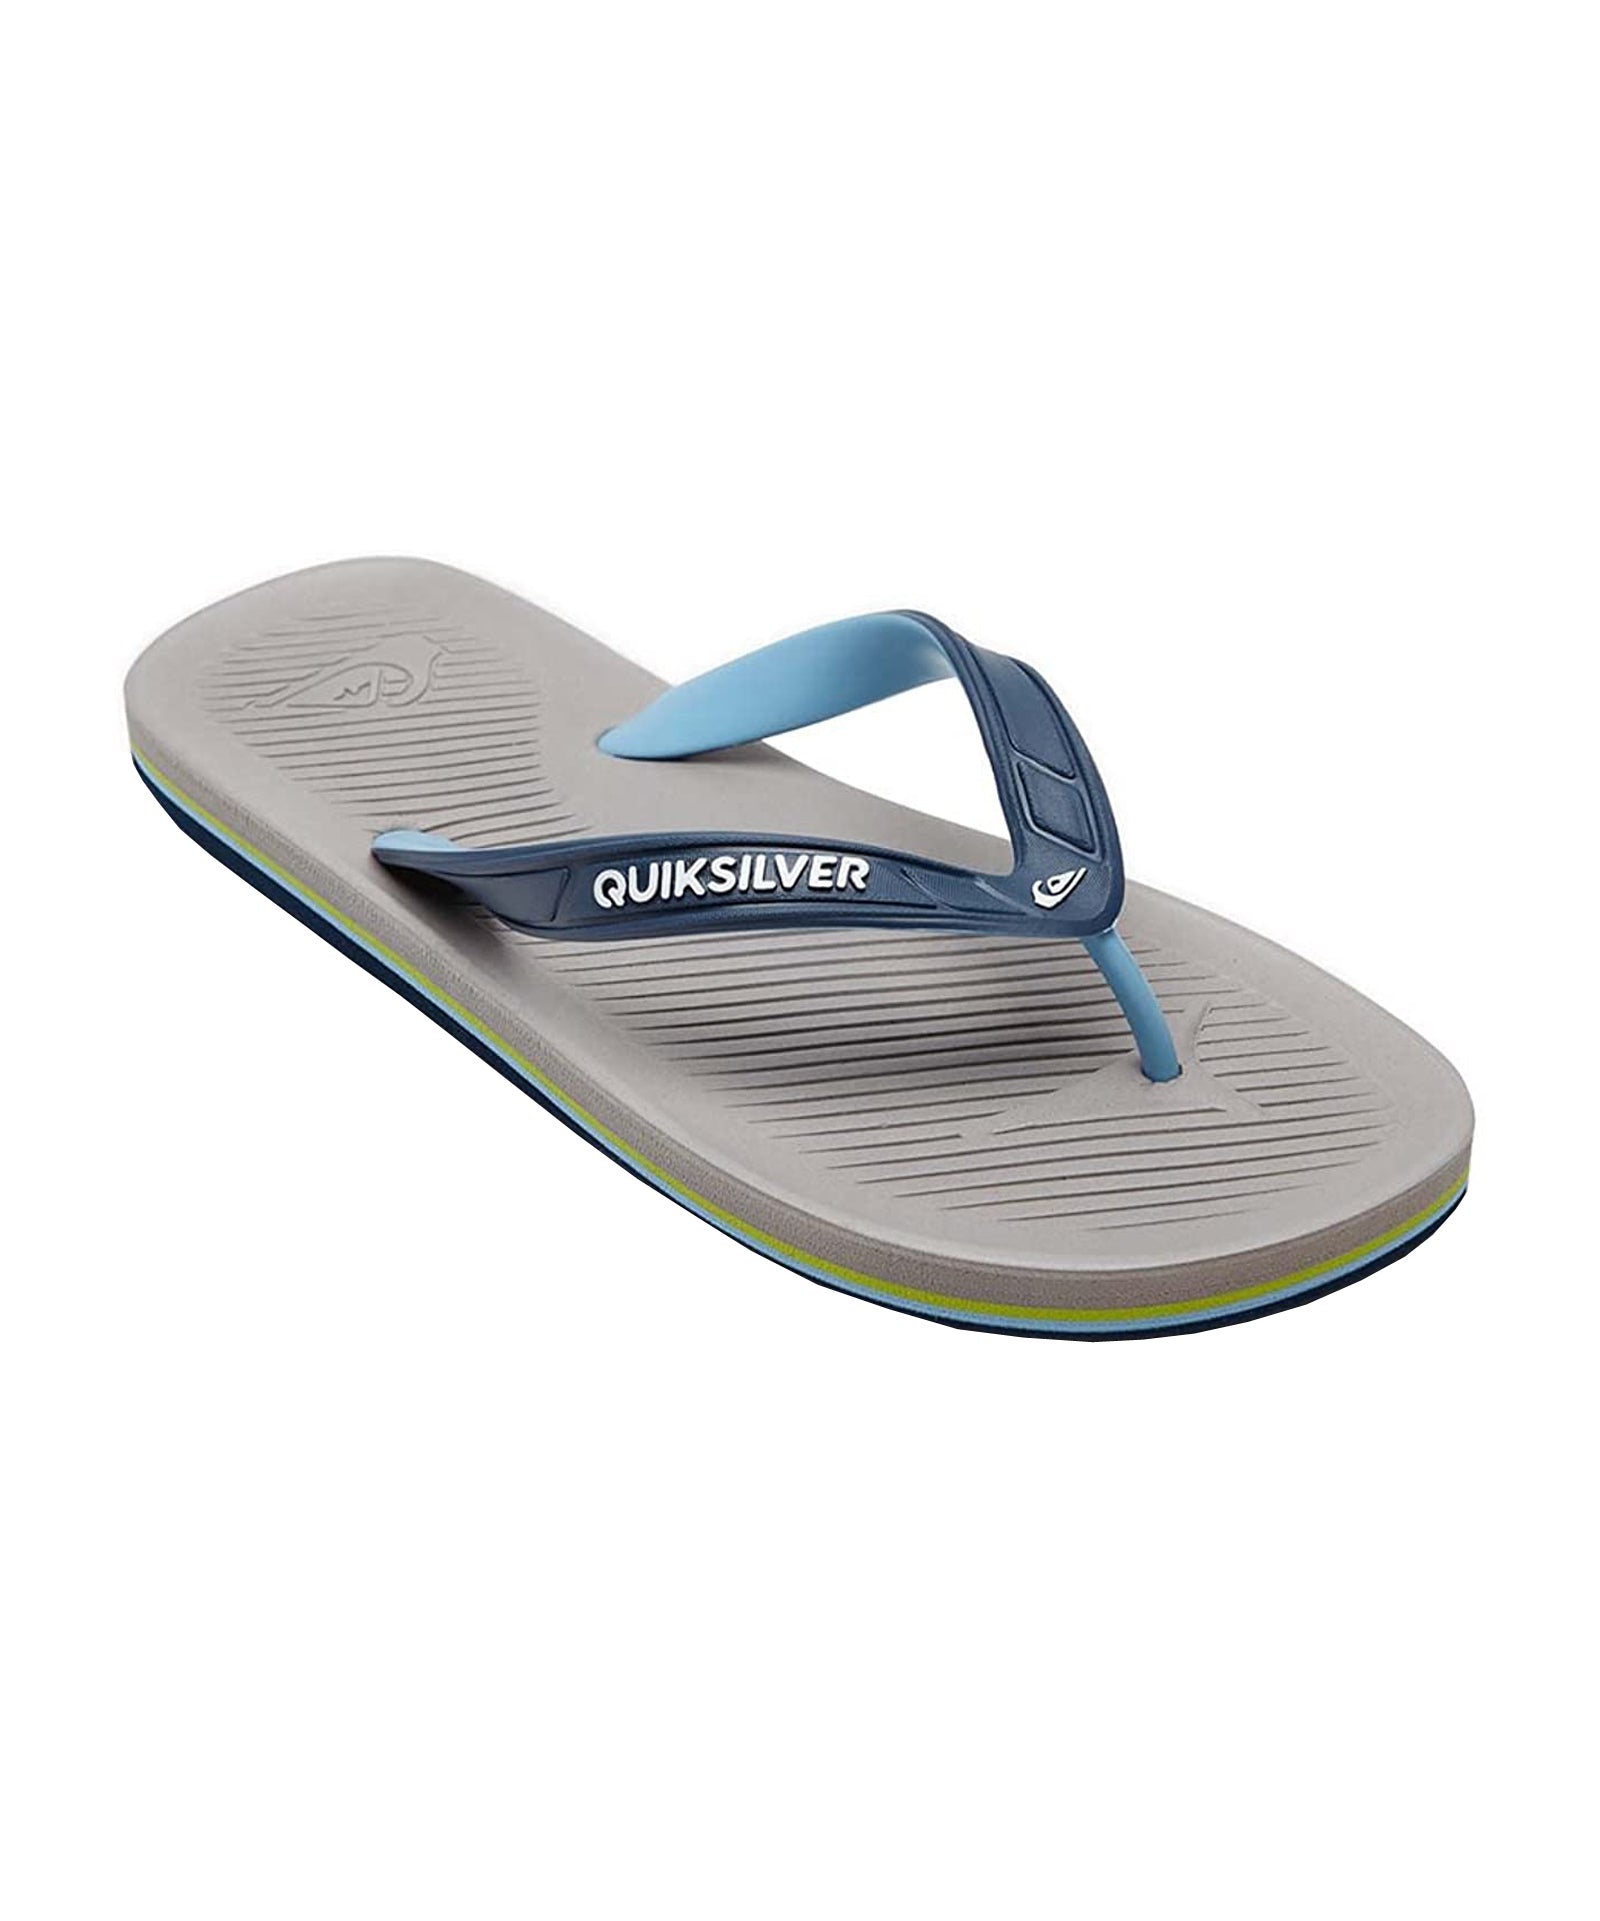 Quiksilver Haleiwa 2 Mens Sandal XBSB-Blue-Grey-Blue 12